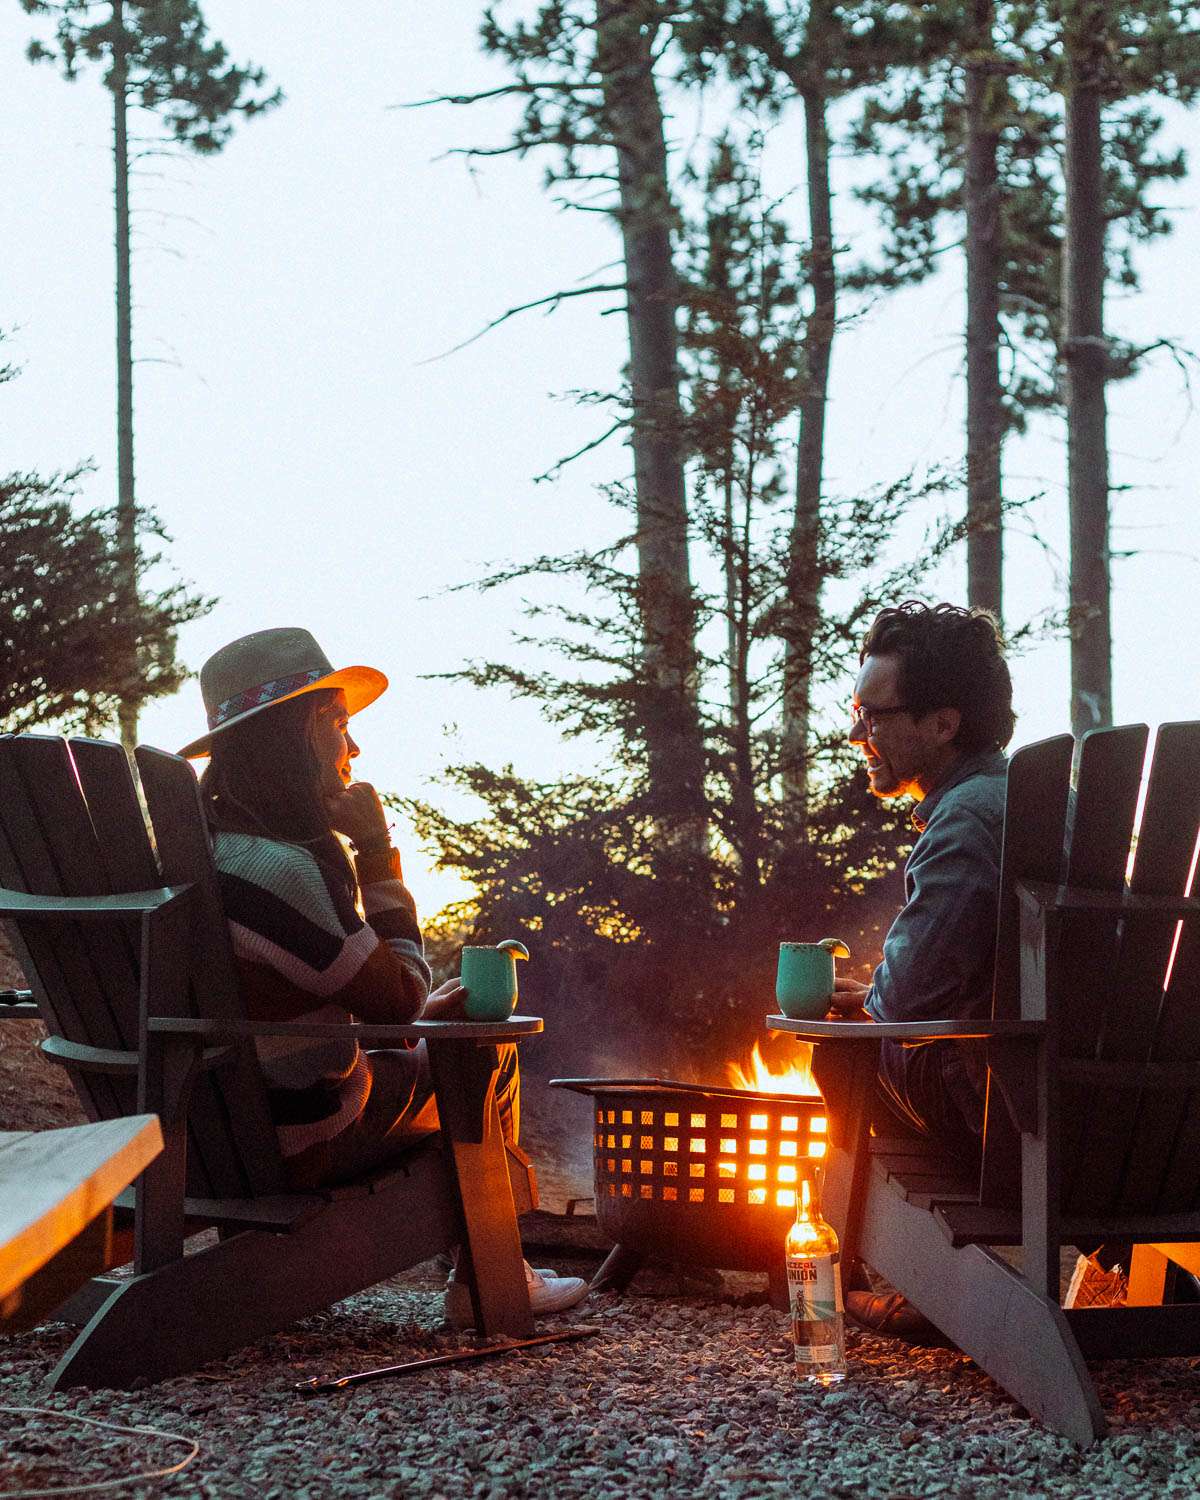 Rachel Off Duty: Couple Enjoying a Campfire at Dusk